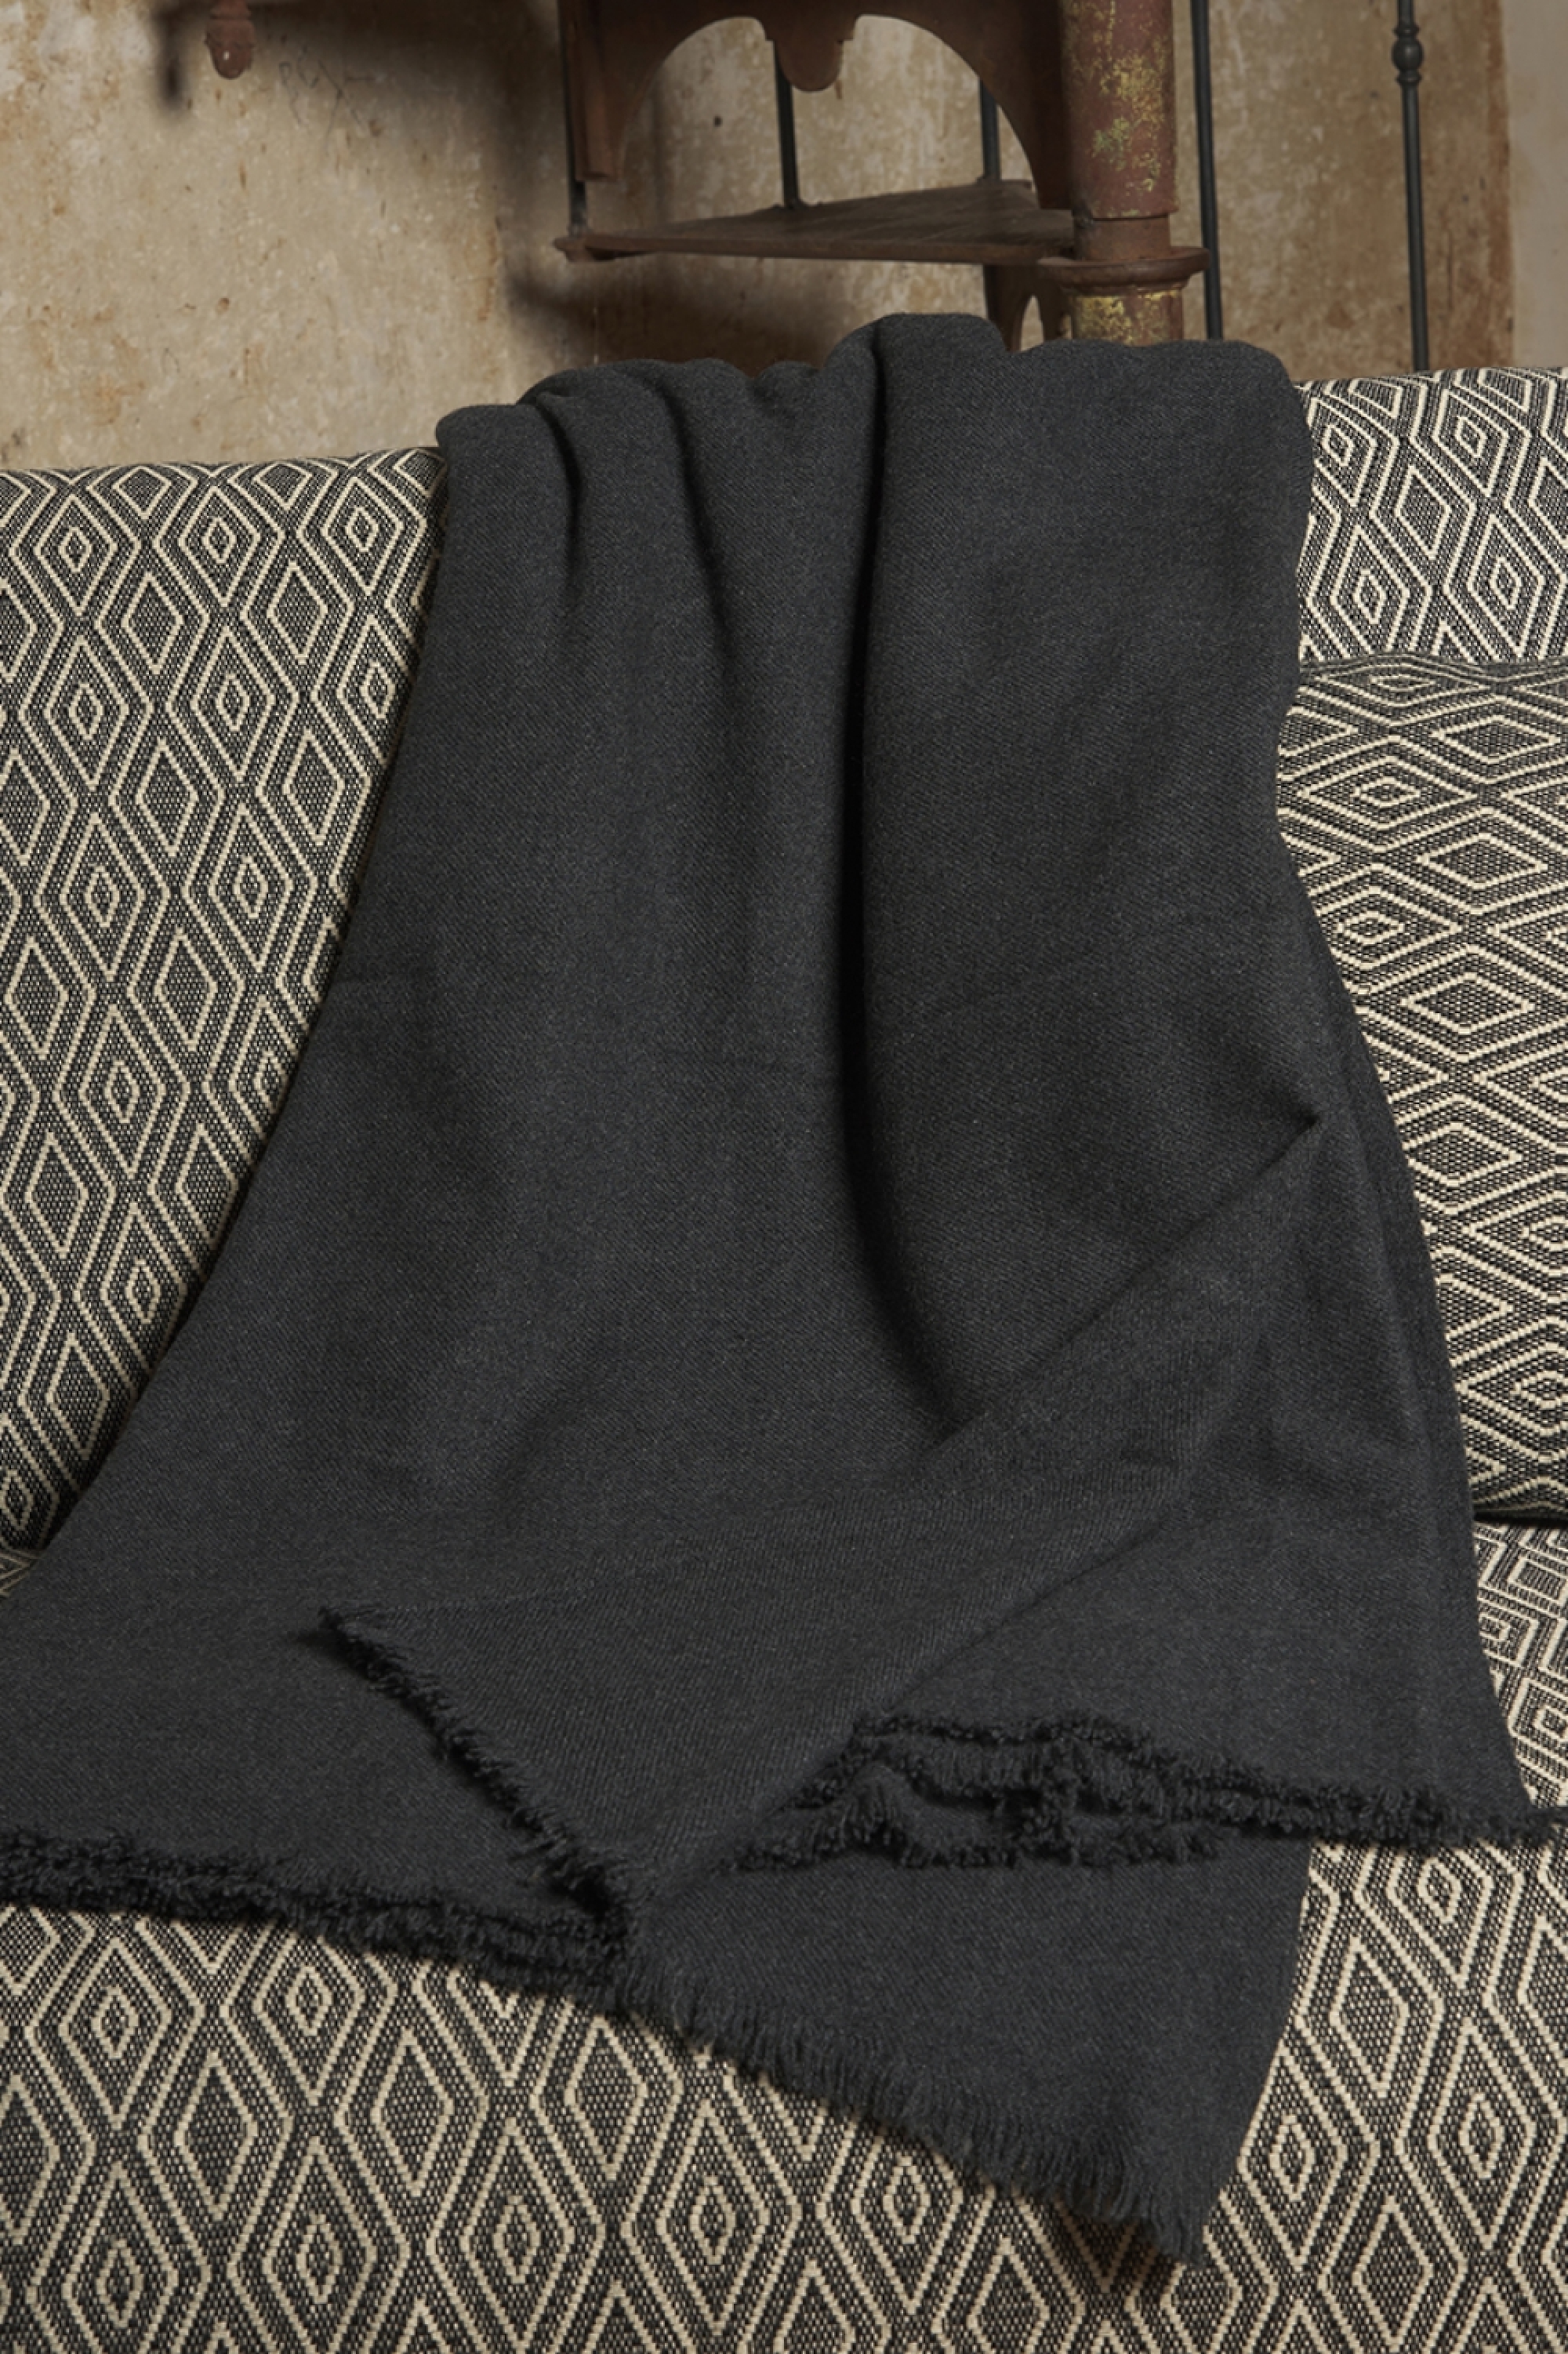 Cashmere accessories blanket toodoo plain m 180 x 220 carbon 180 x 220 cm